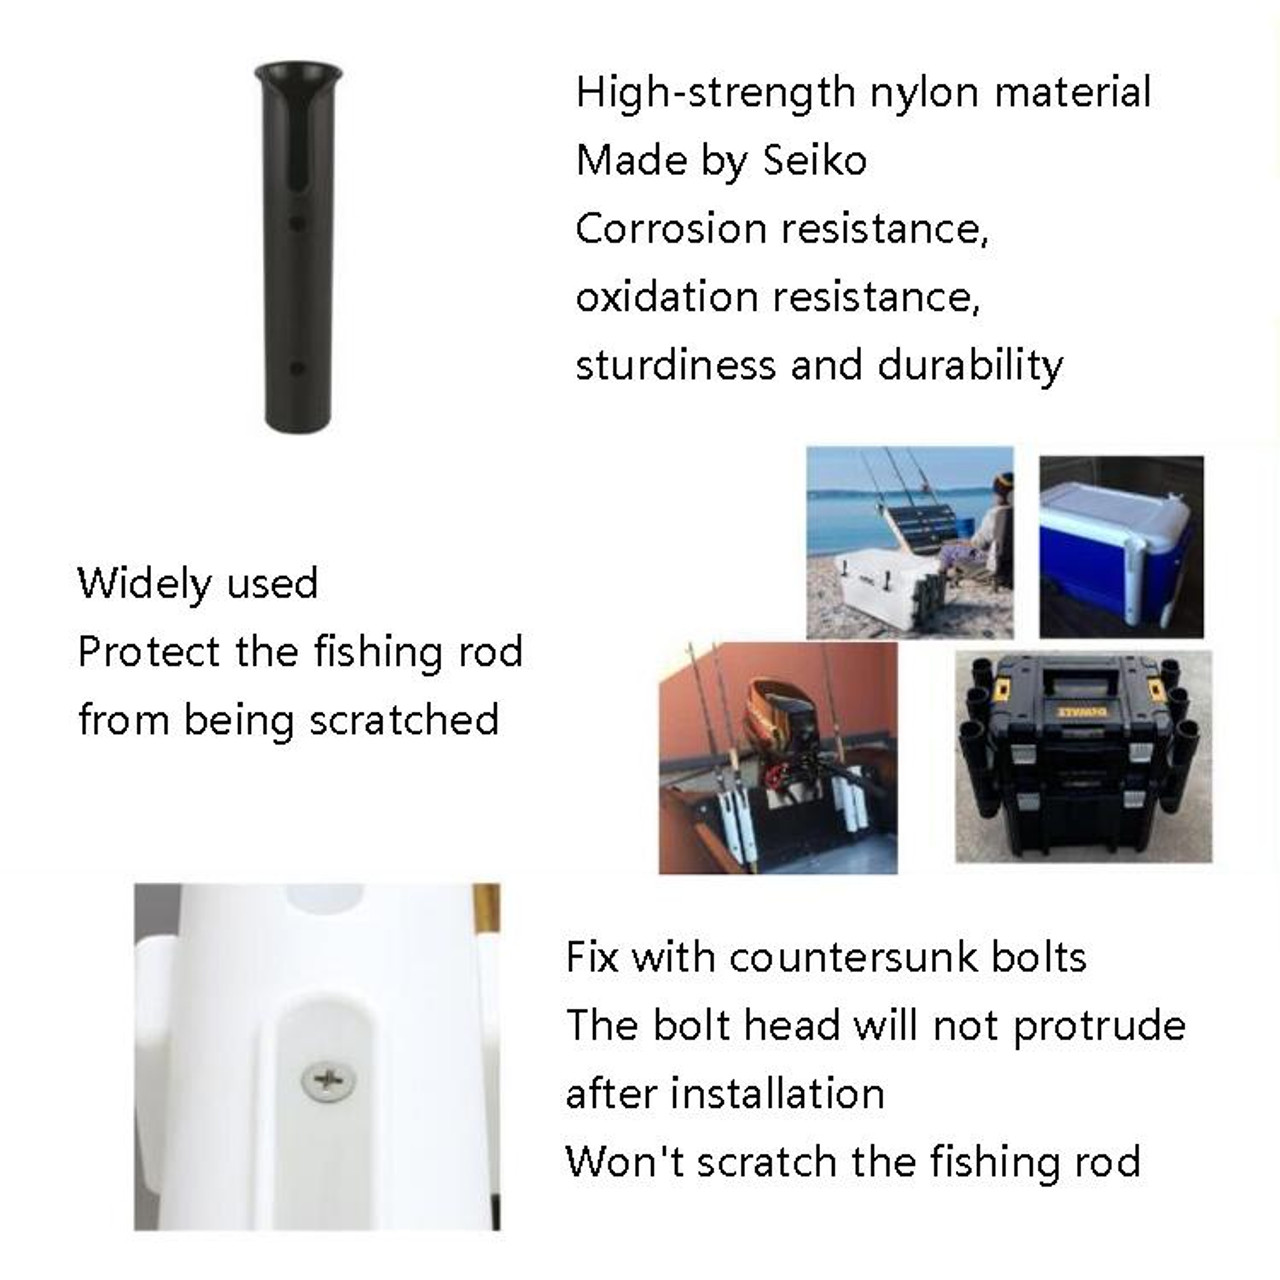 10 PCS/Bag Plastic Fishing Hook Keeper for Fishing Rod Pole